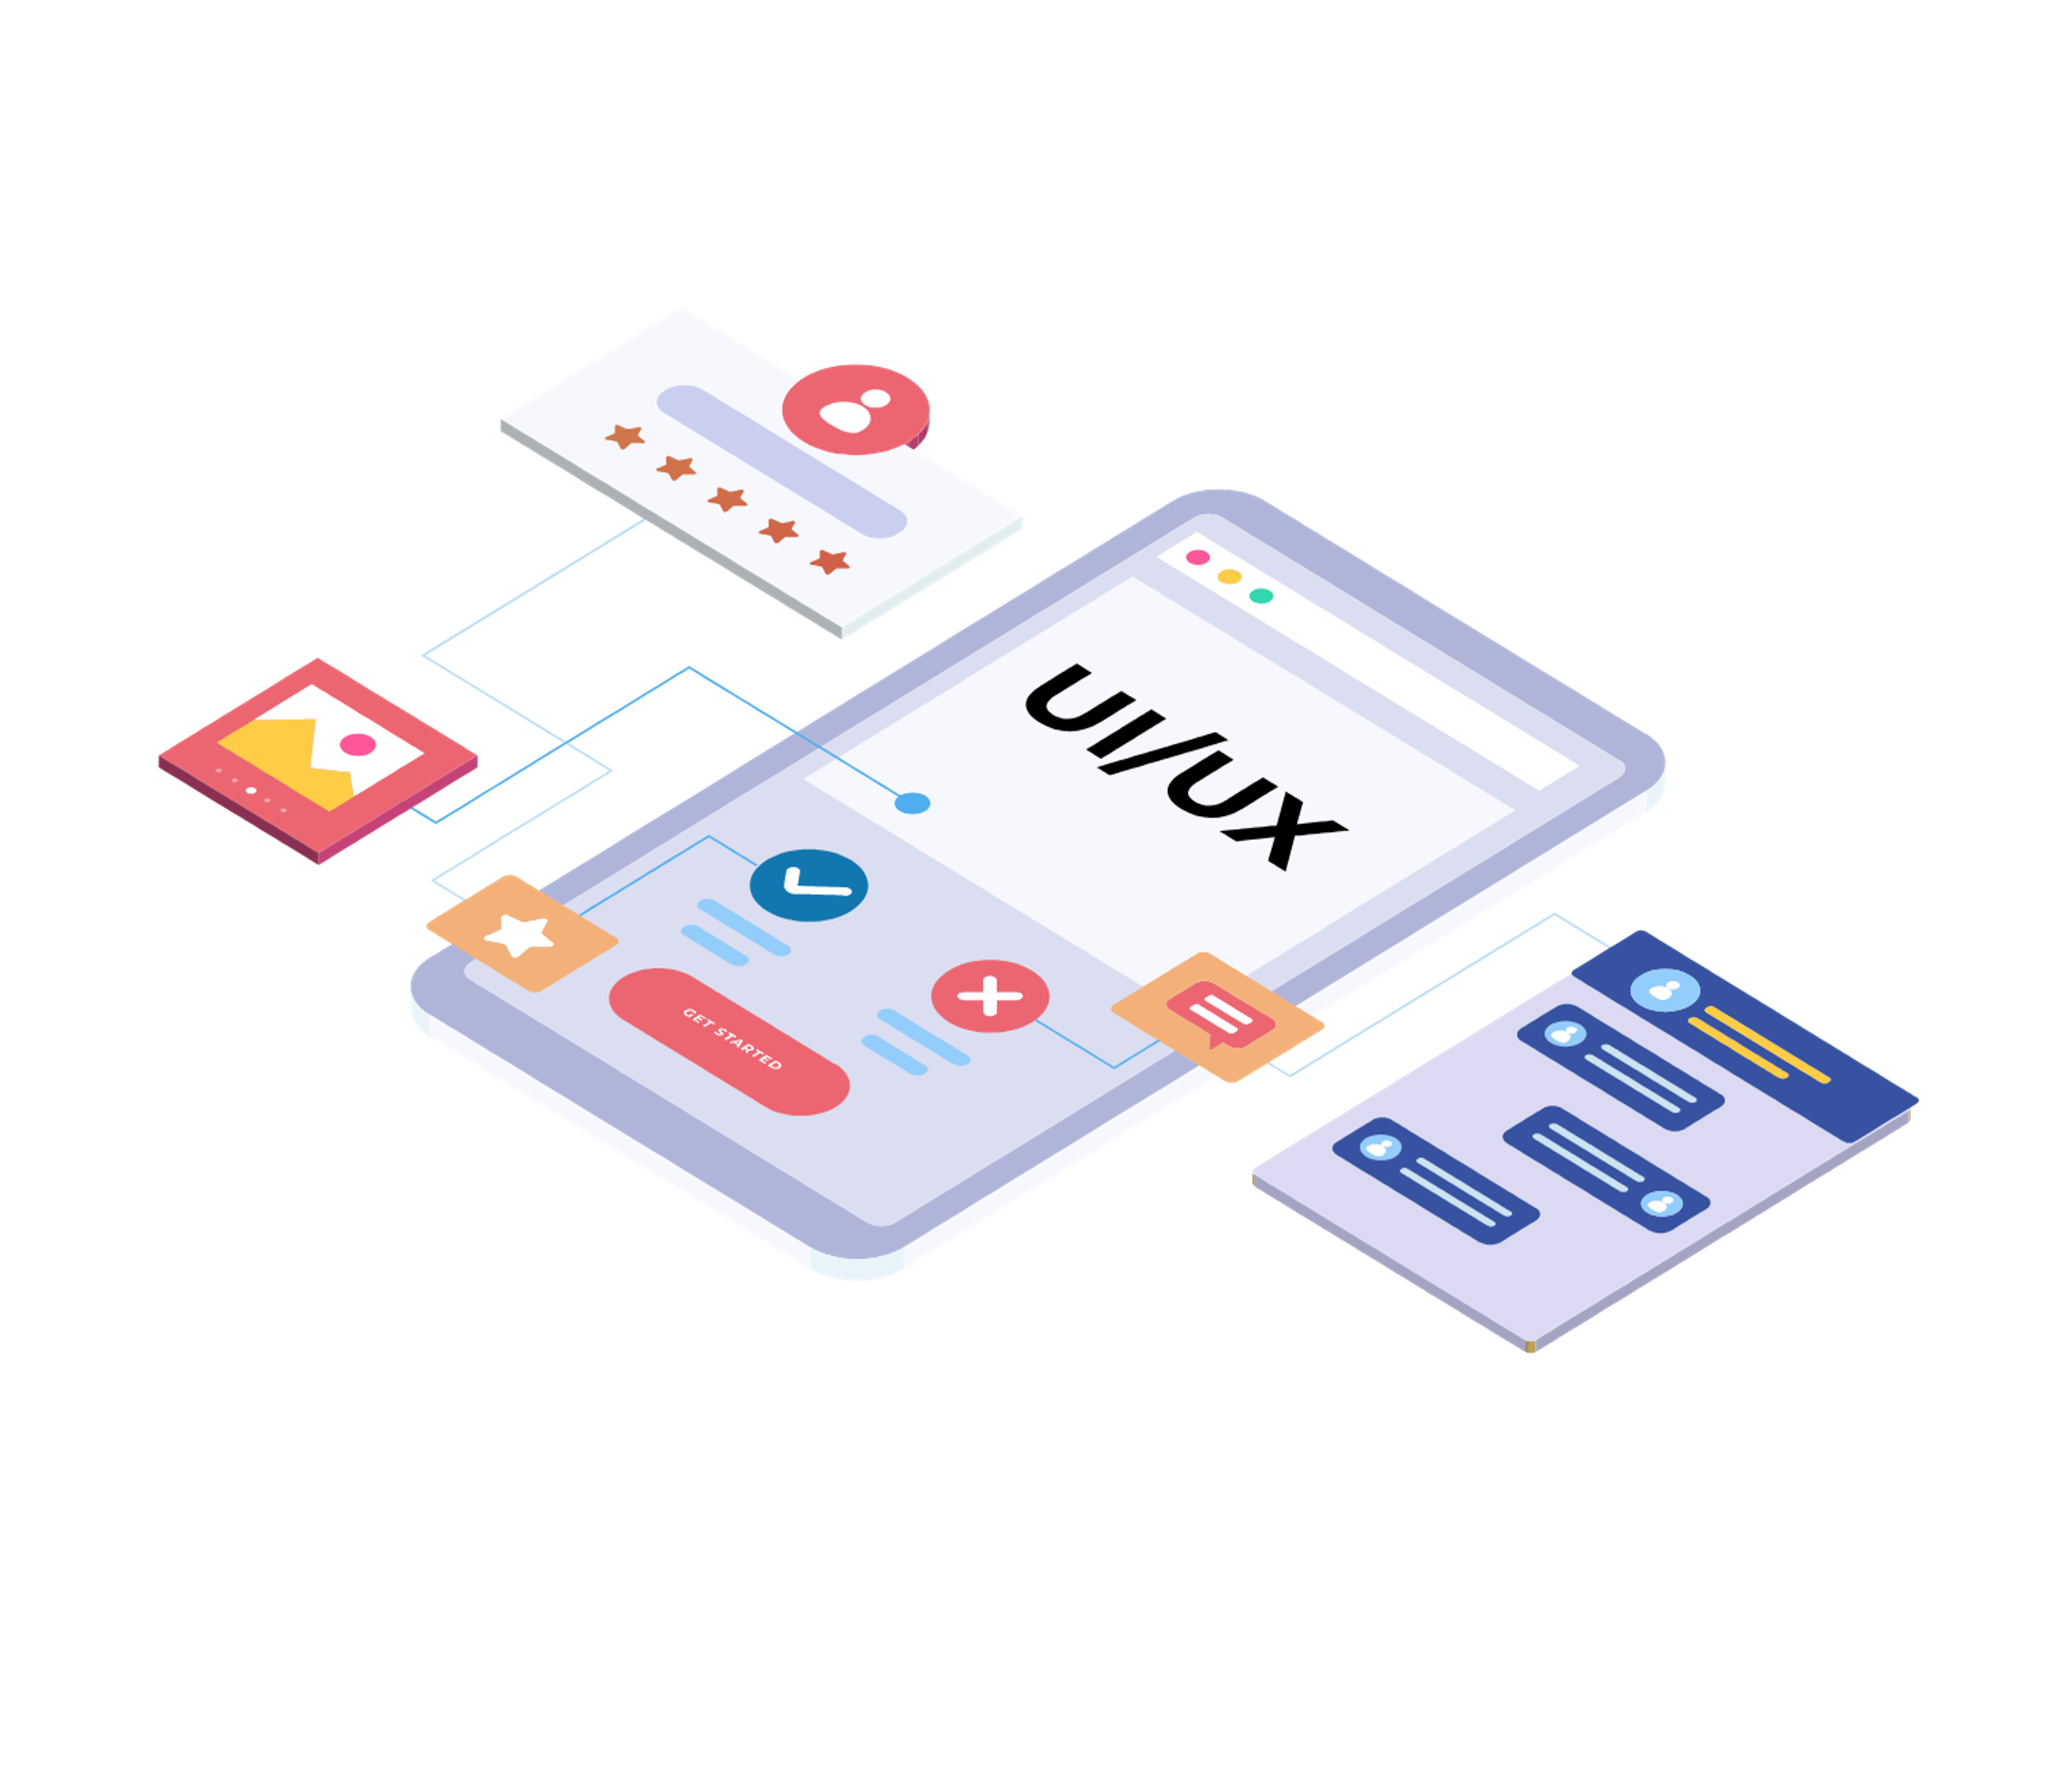 UI_UX Design and Development